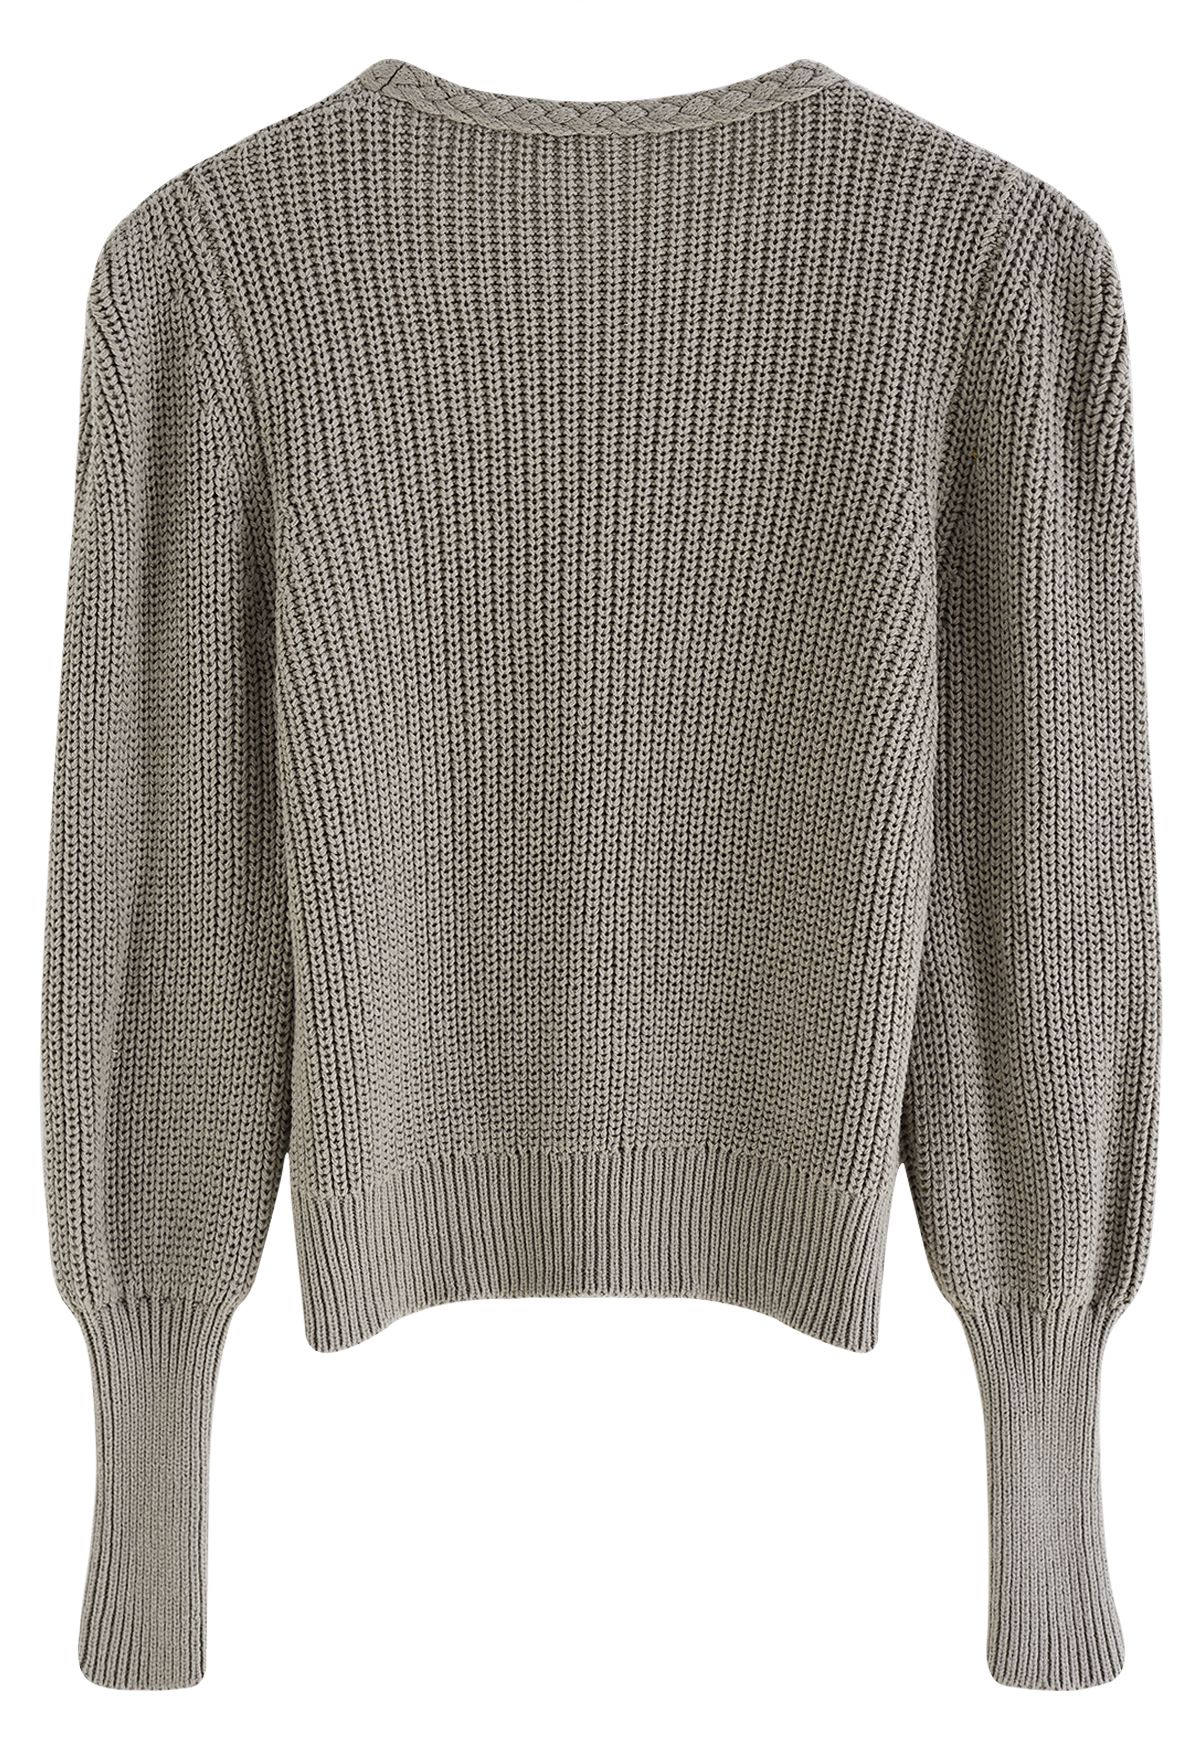 Braided Neck Puff Sleeve Rib Knit Top in Grey